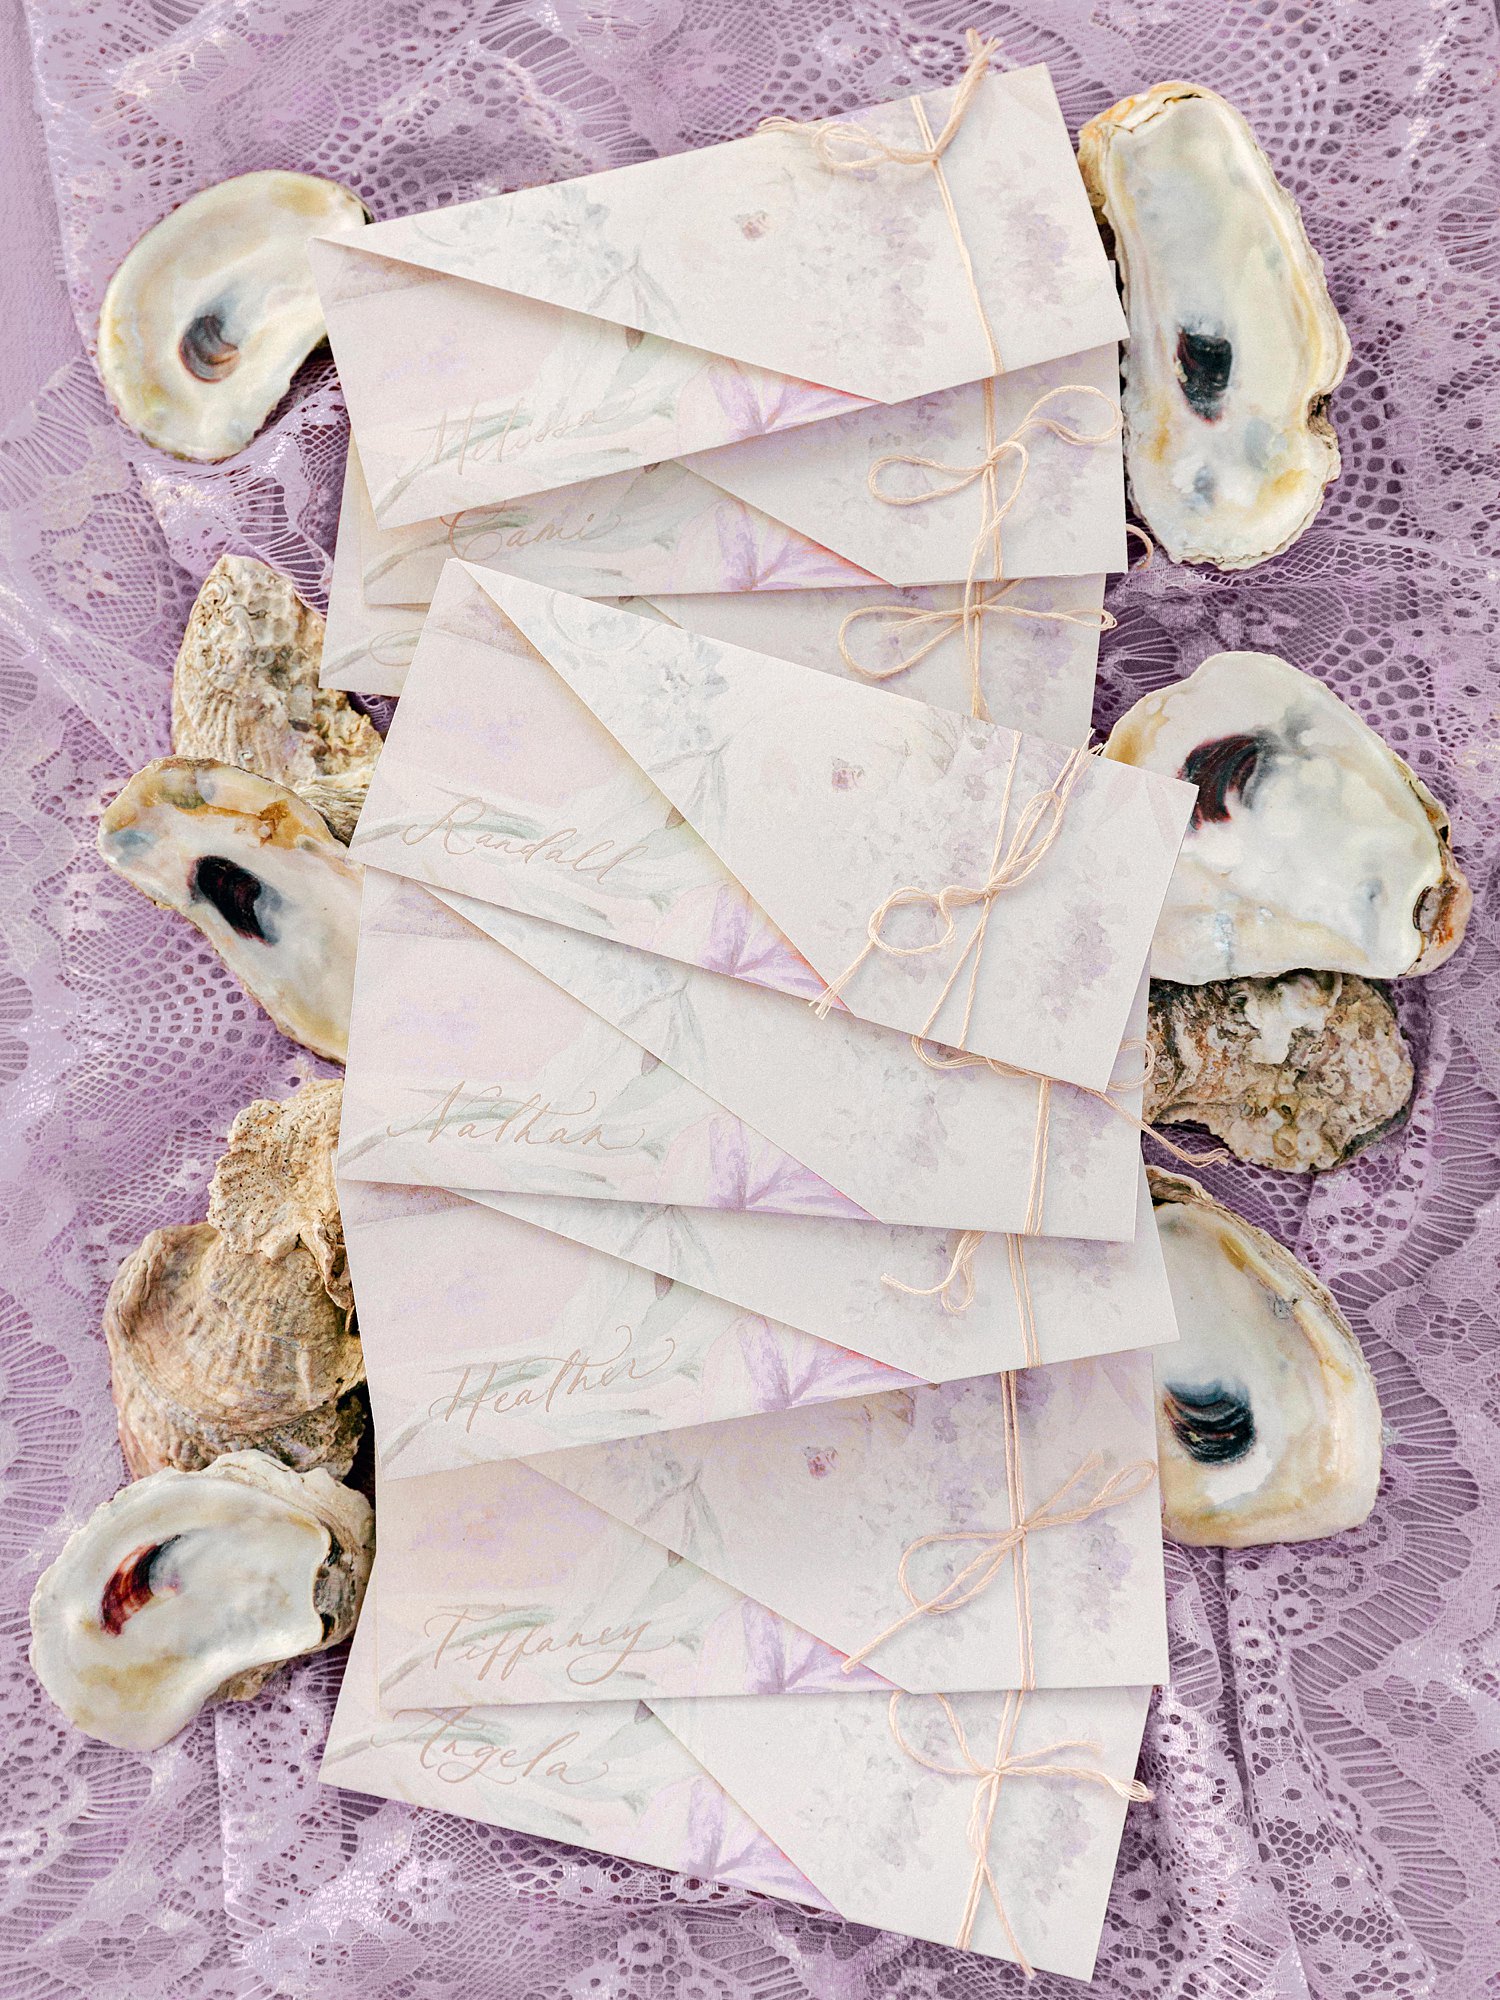 Oyster shells surrounding folded menus against purple lace backdrop wedding flat lay